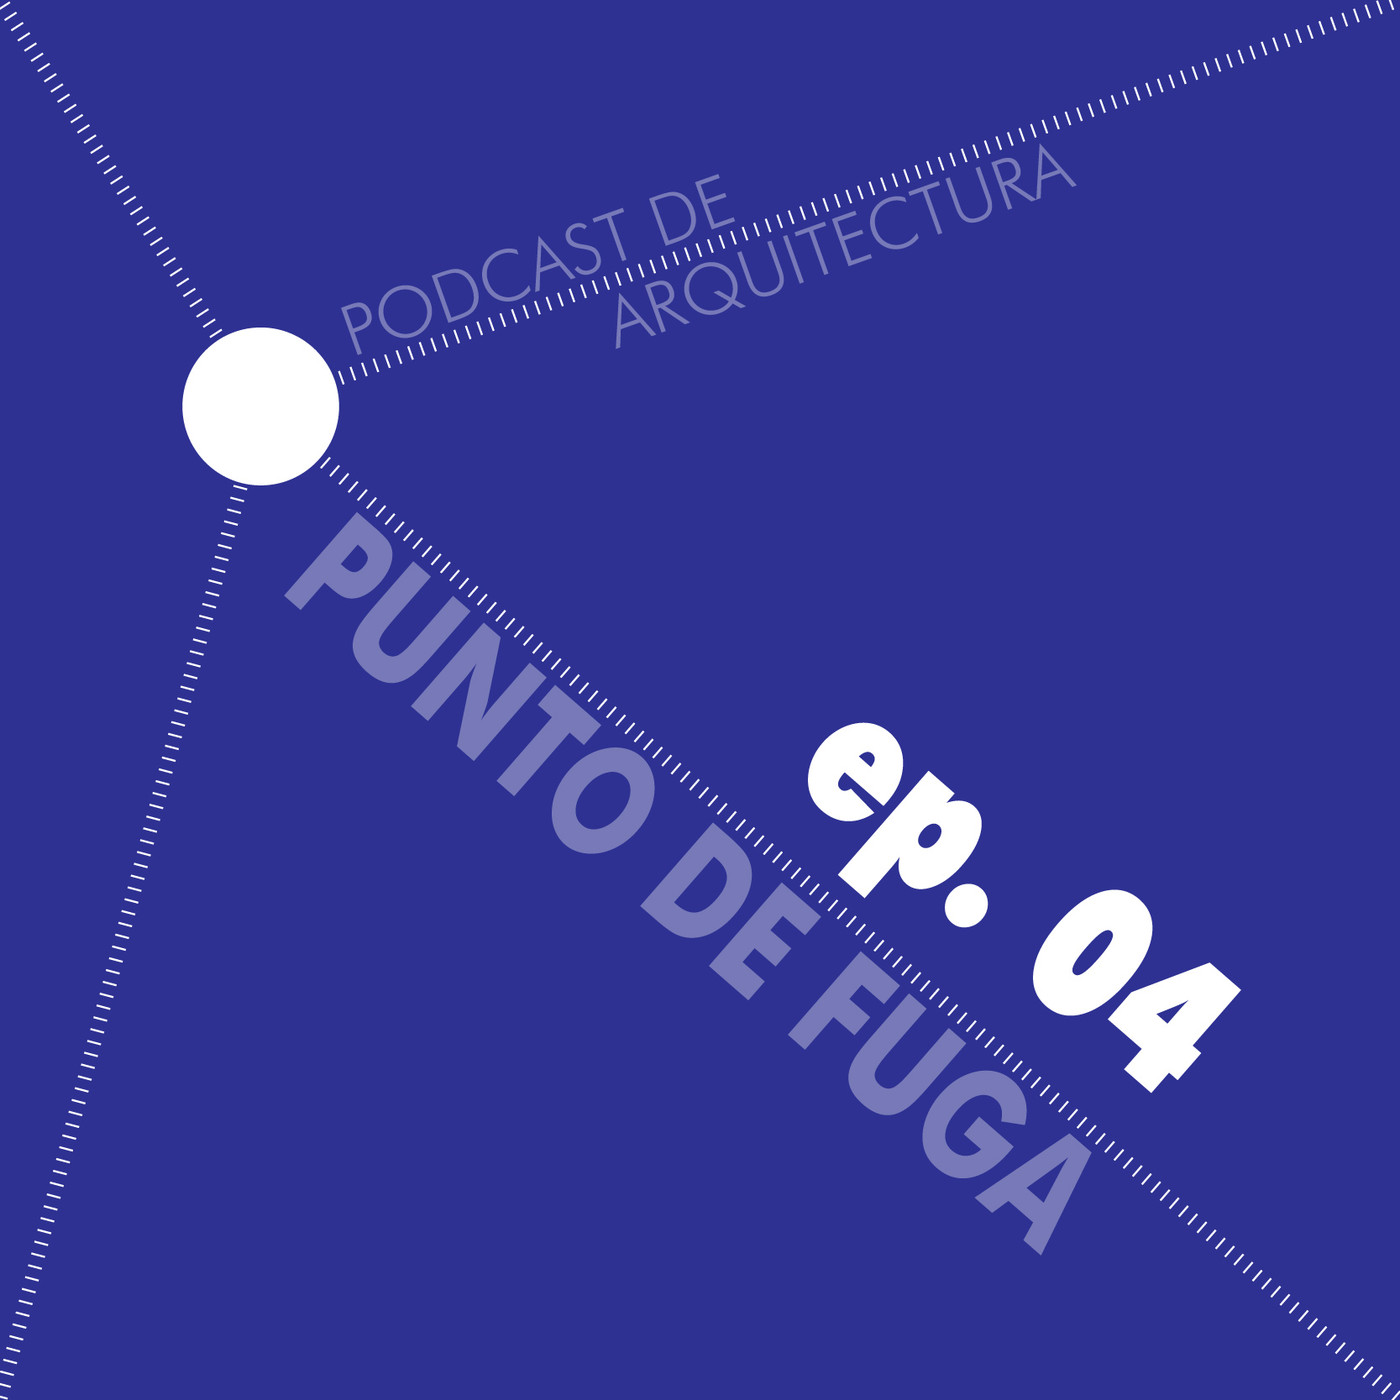 Ep. 04 - PdF - "Garage" con Luis Ortega Govela